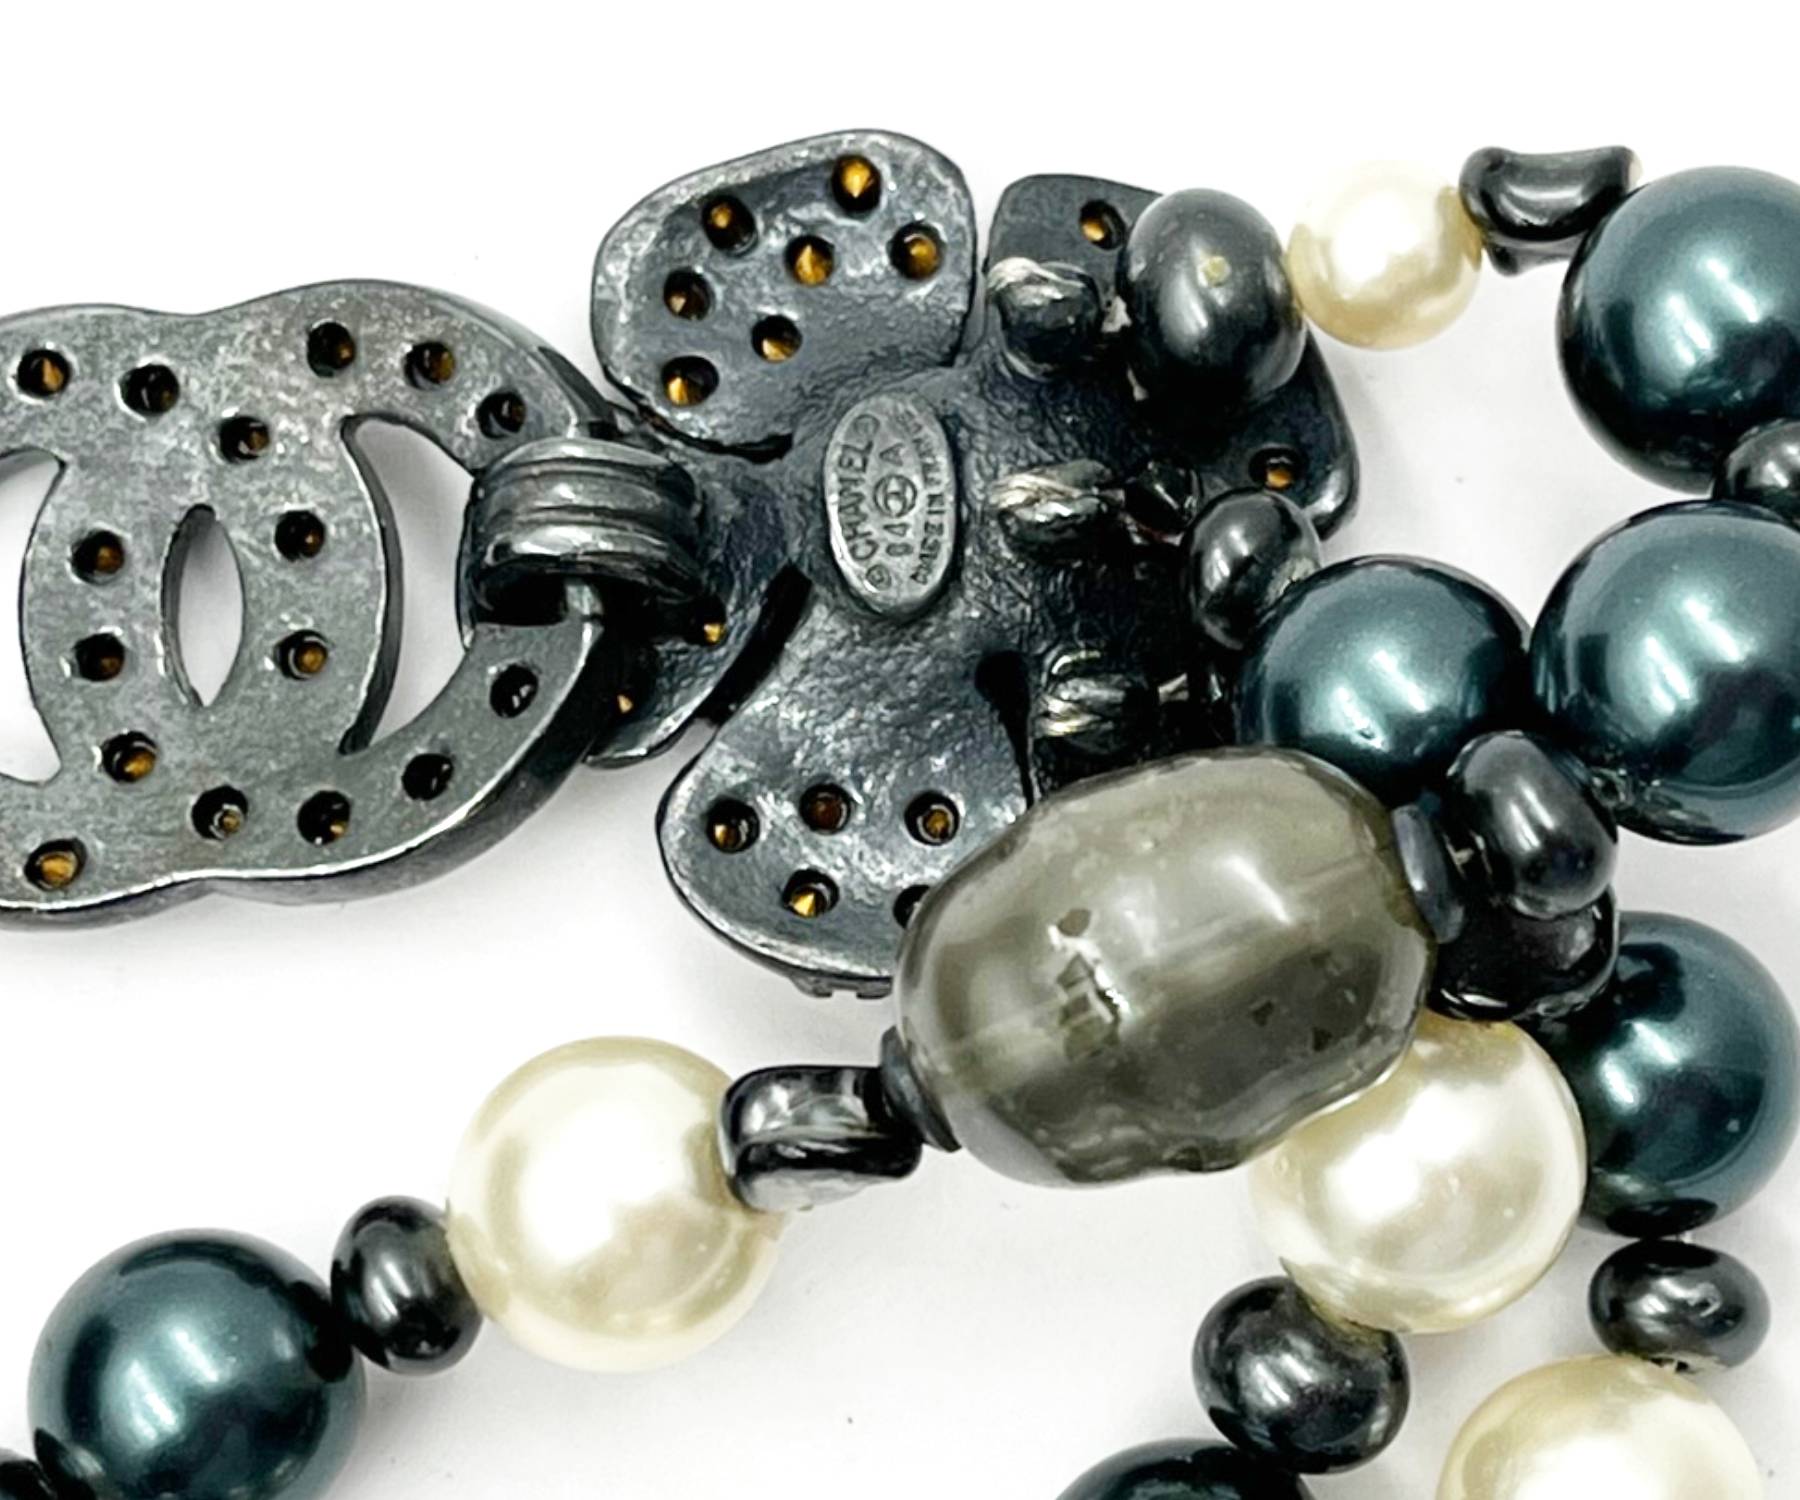 chanel black pearl necklace vintage